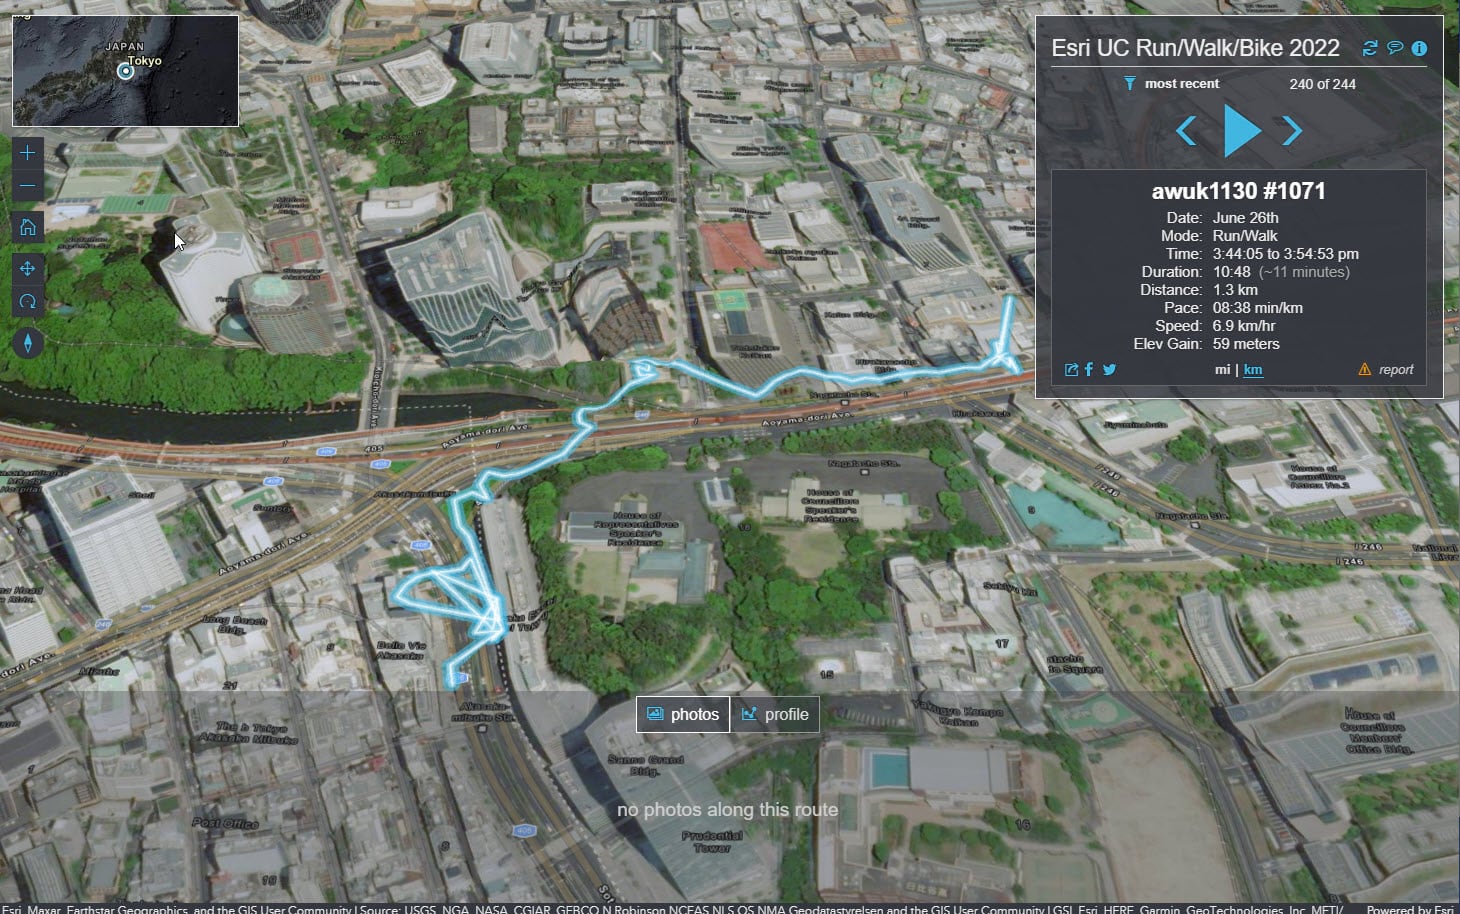 Esri UC Run/Walk/Bike 2022 event route in Tokyo shown on 3D app